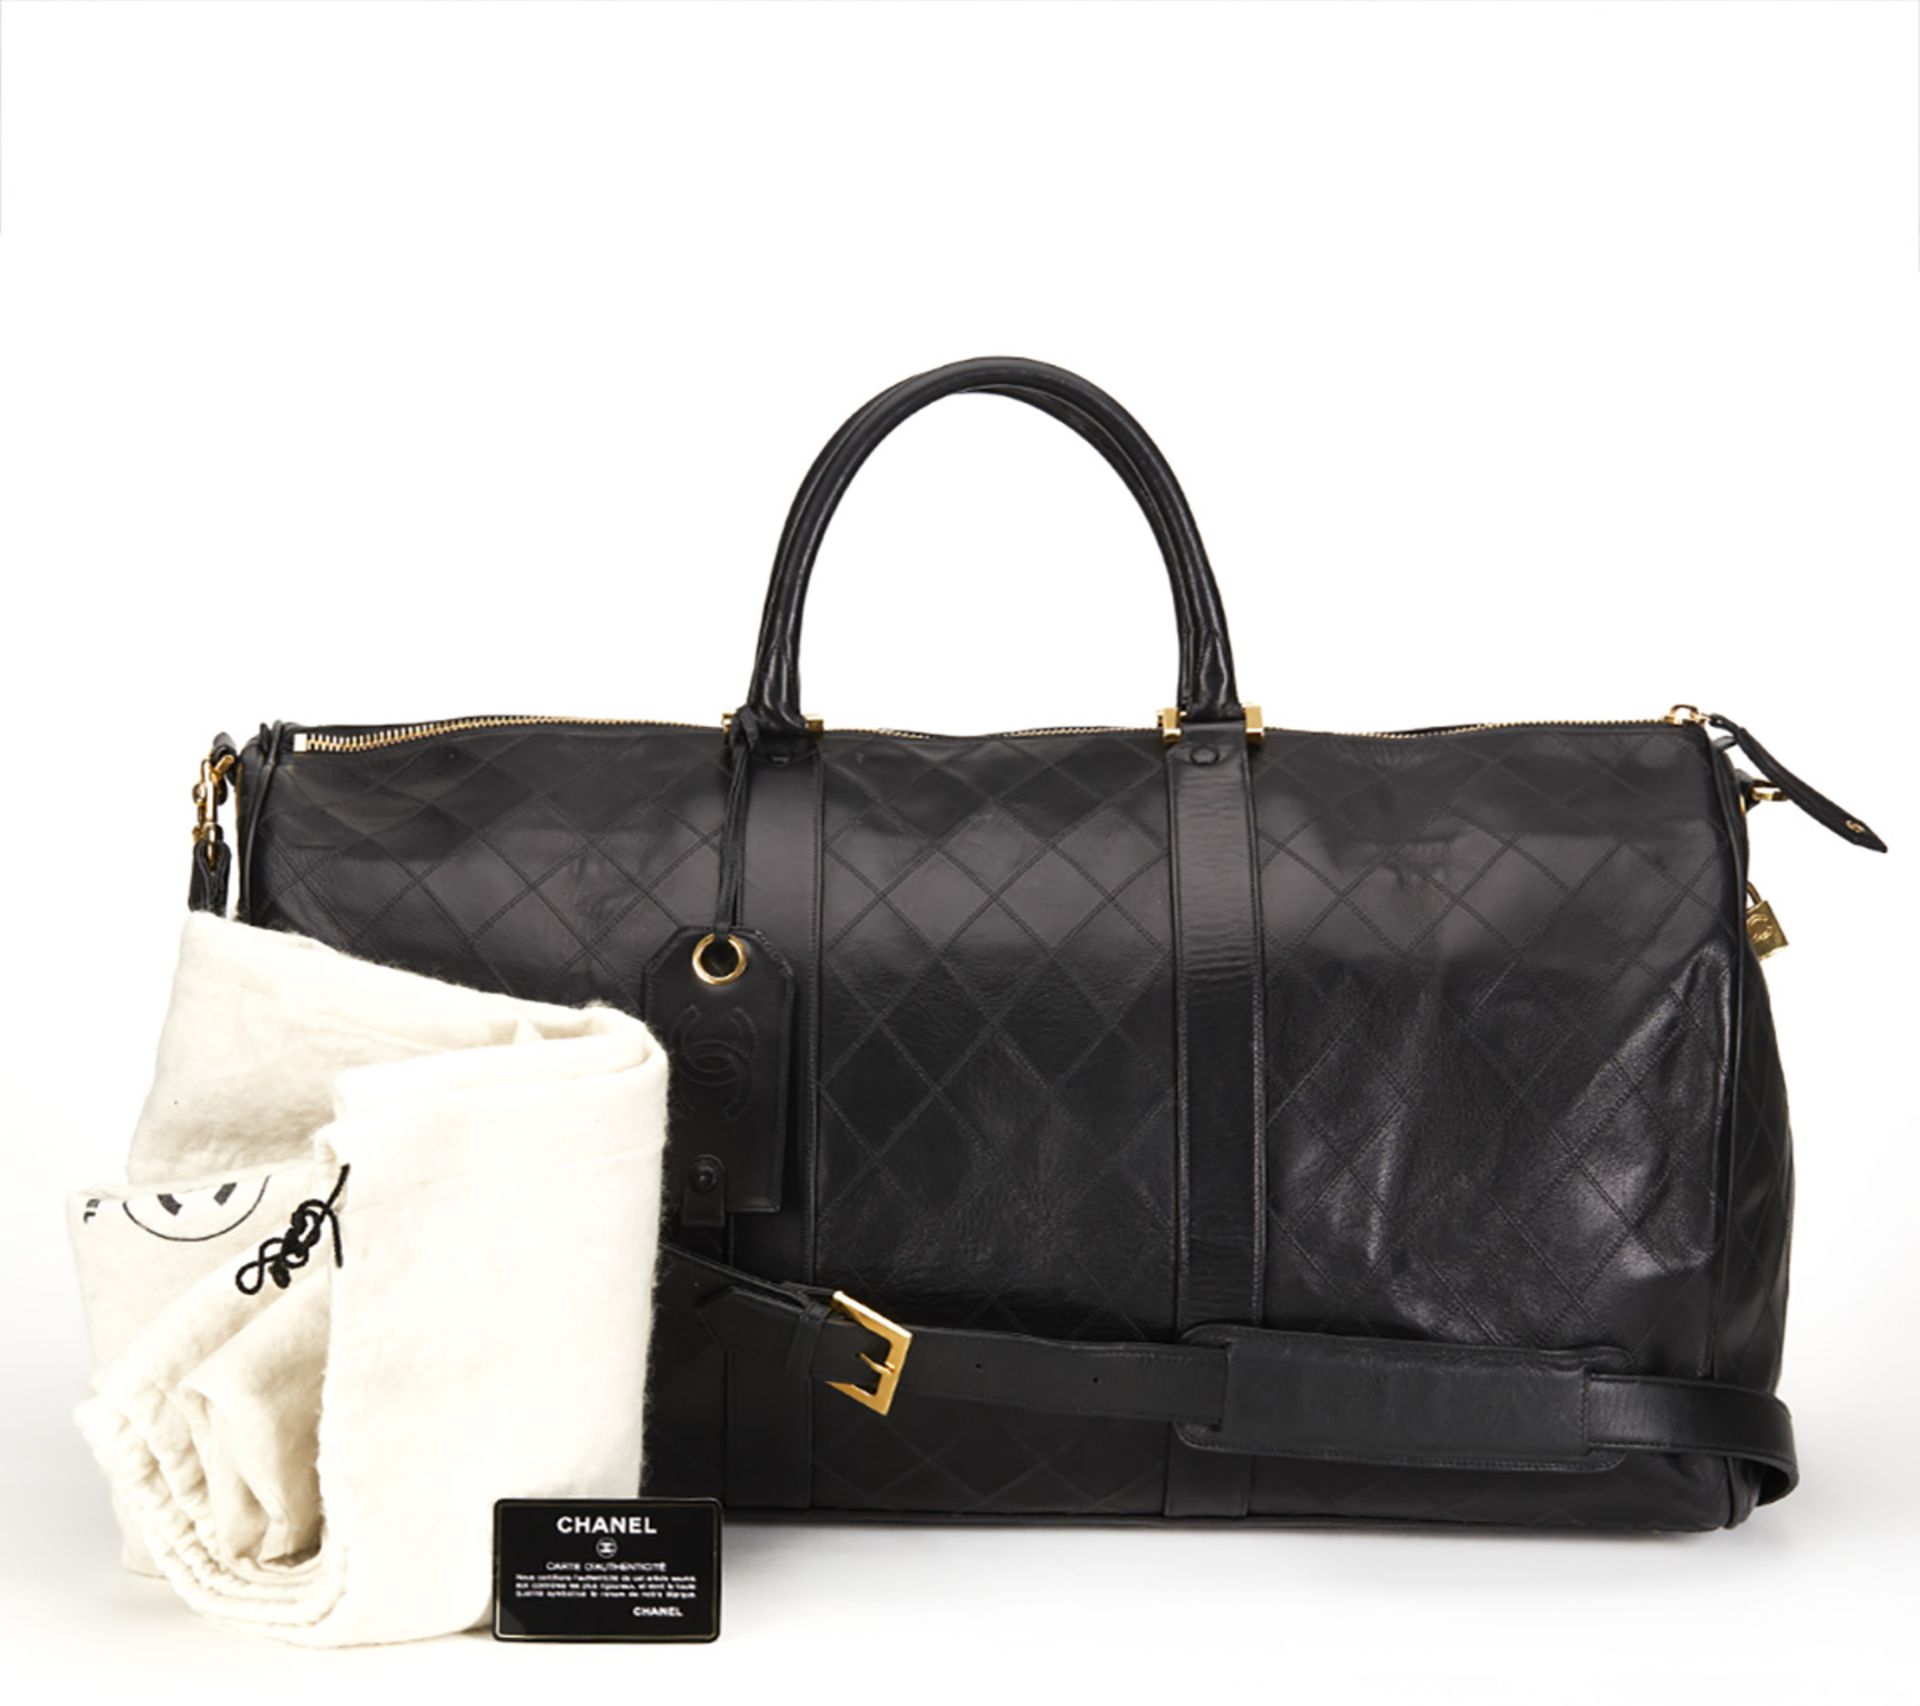 Chanel, Boston Travel Bag - Image 10 of 10